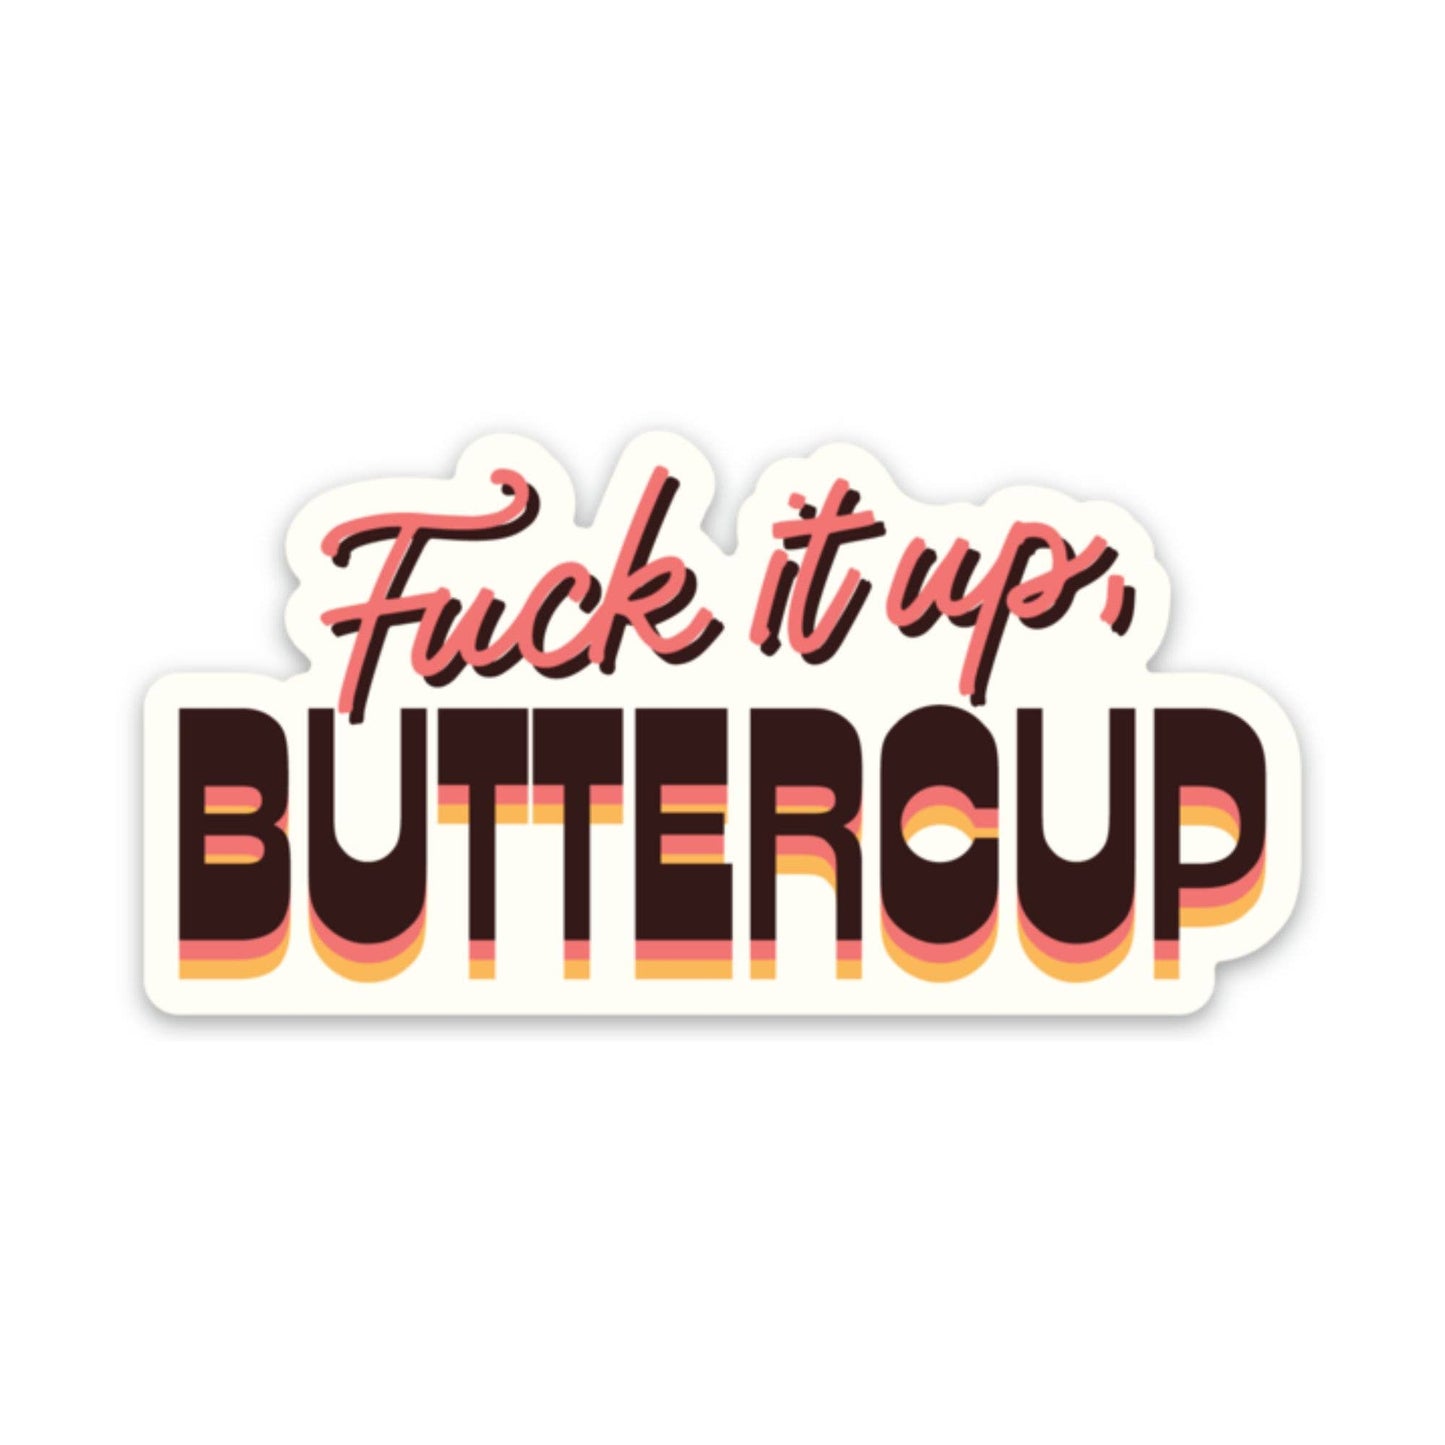 Fuck It Up, Buttercup Sticker